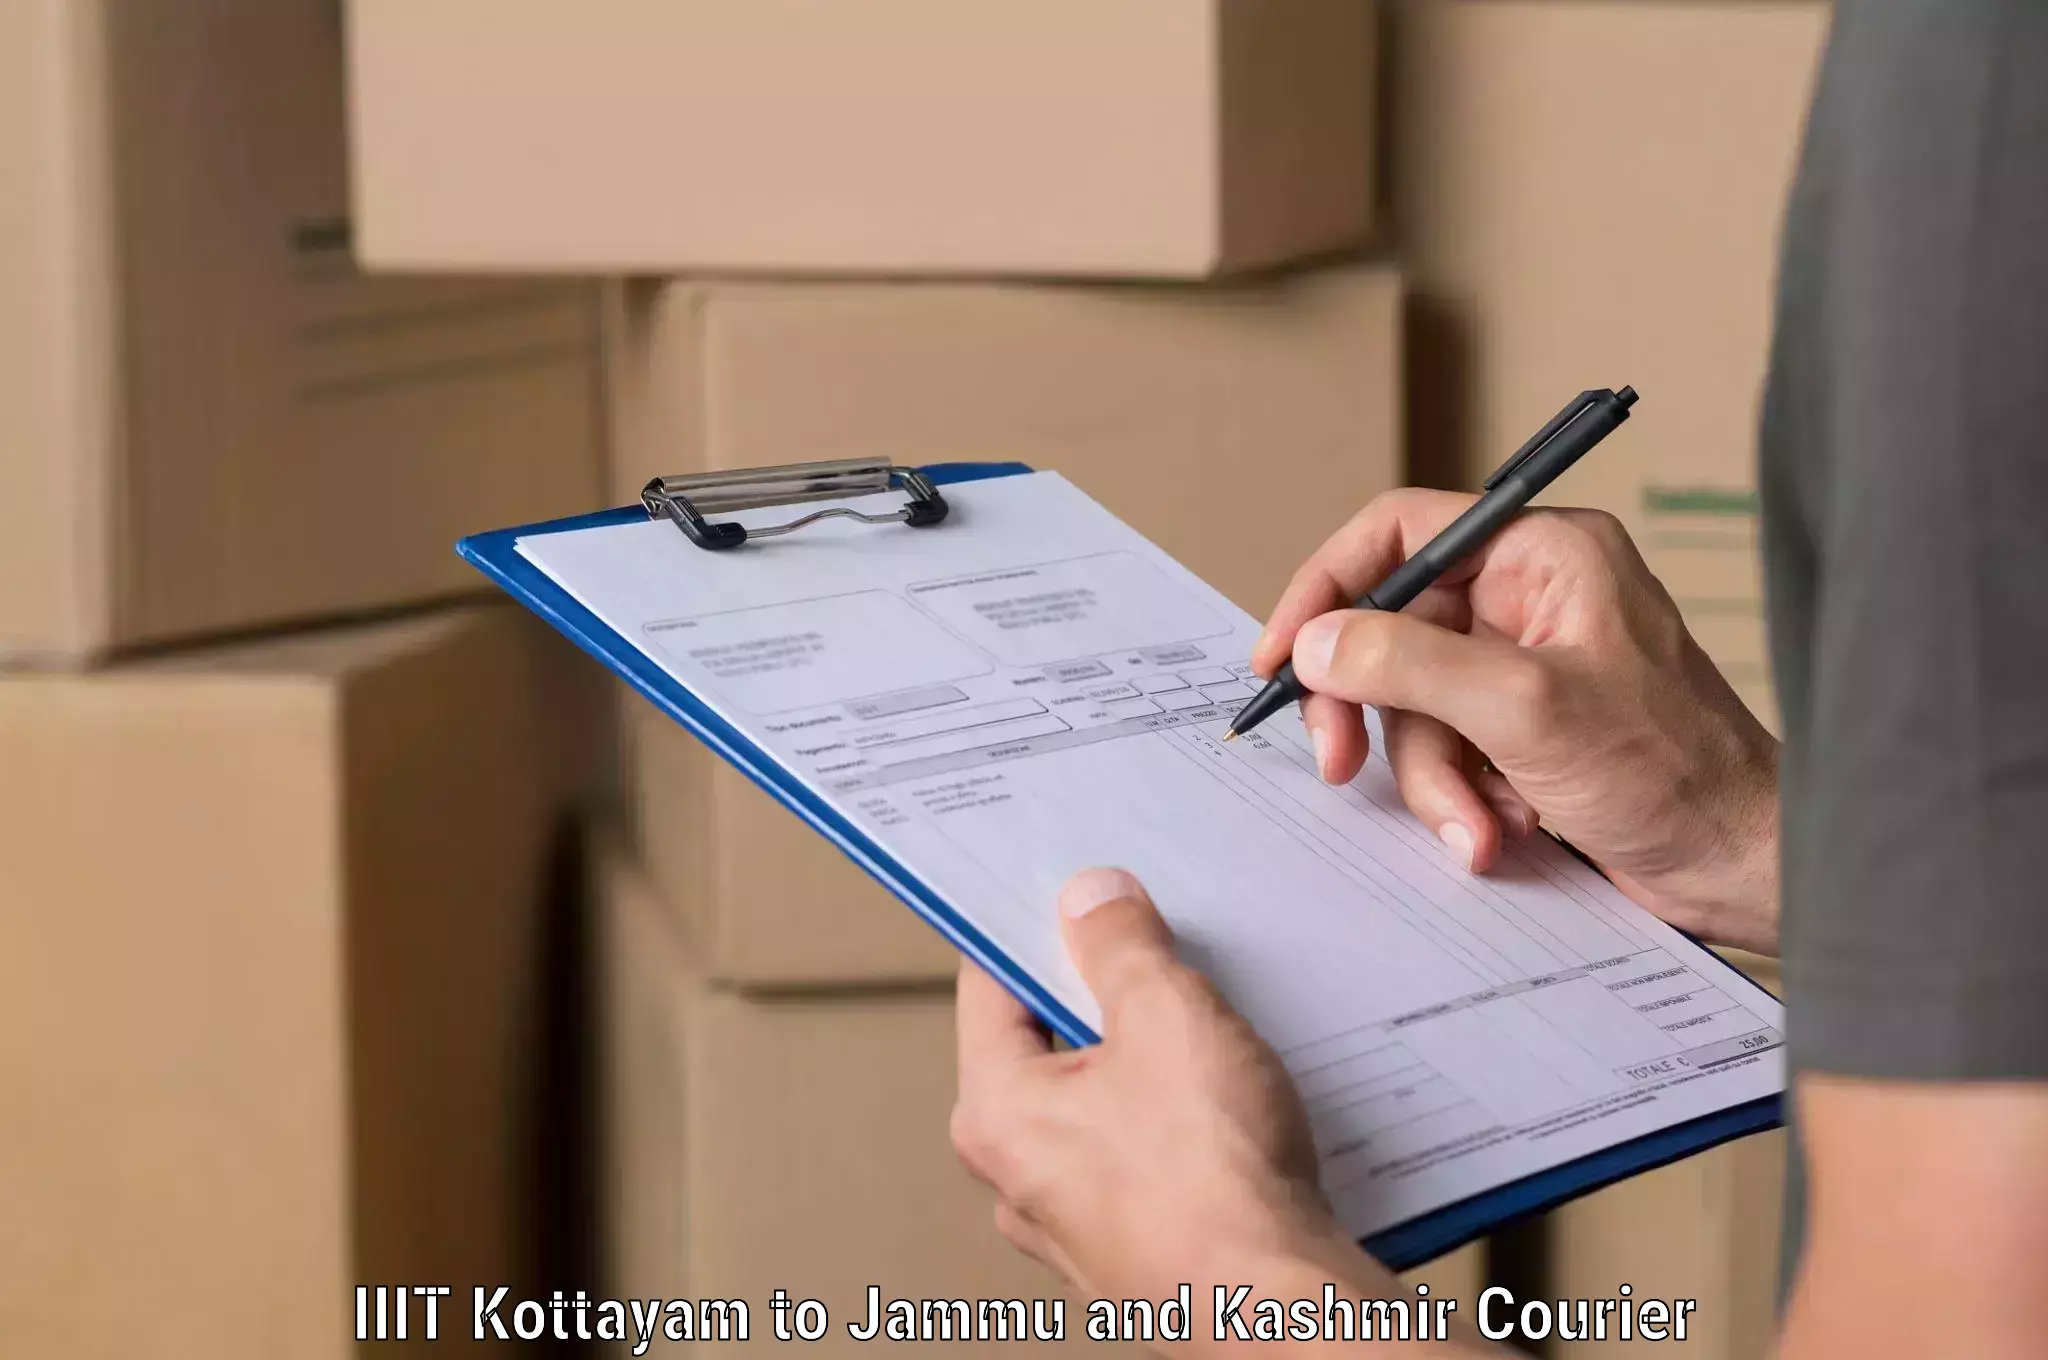 Express postal services IIIT Kottayam to Jammu